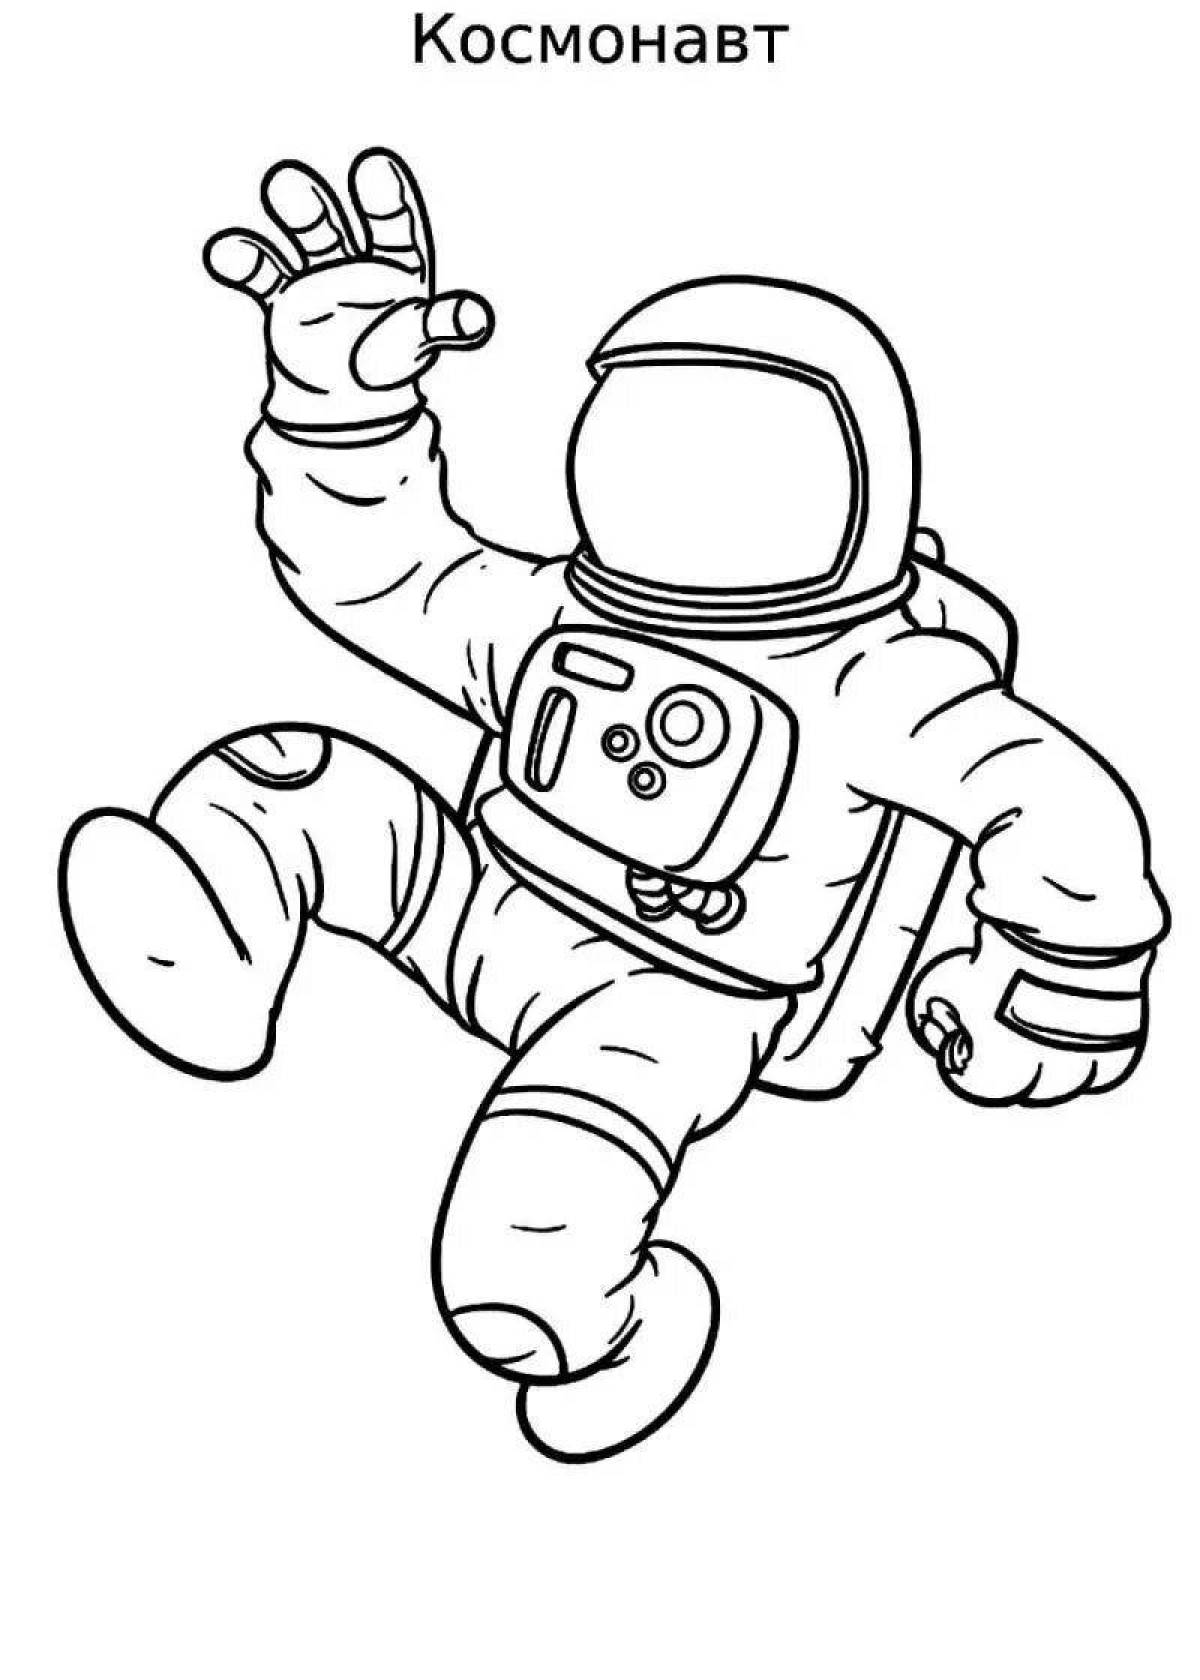 Скафандр раскраска. Раскраска космонавт в скафандре. Раскраска Космонавта в скафандре для детей. Космонавт раскраска для детей. Космонавт рисунок для детей.